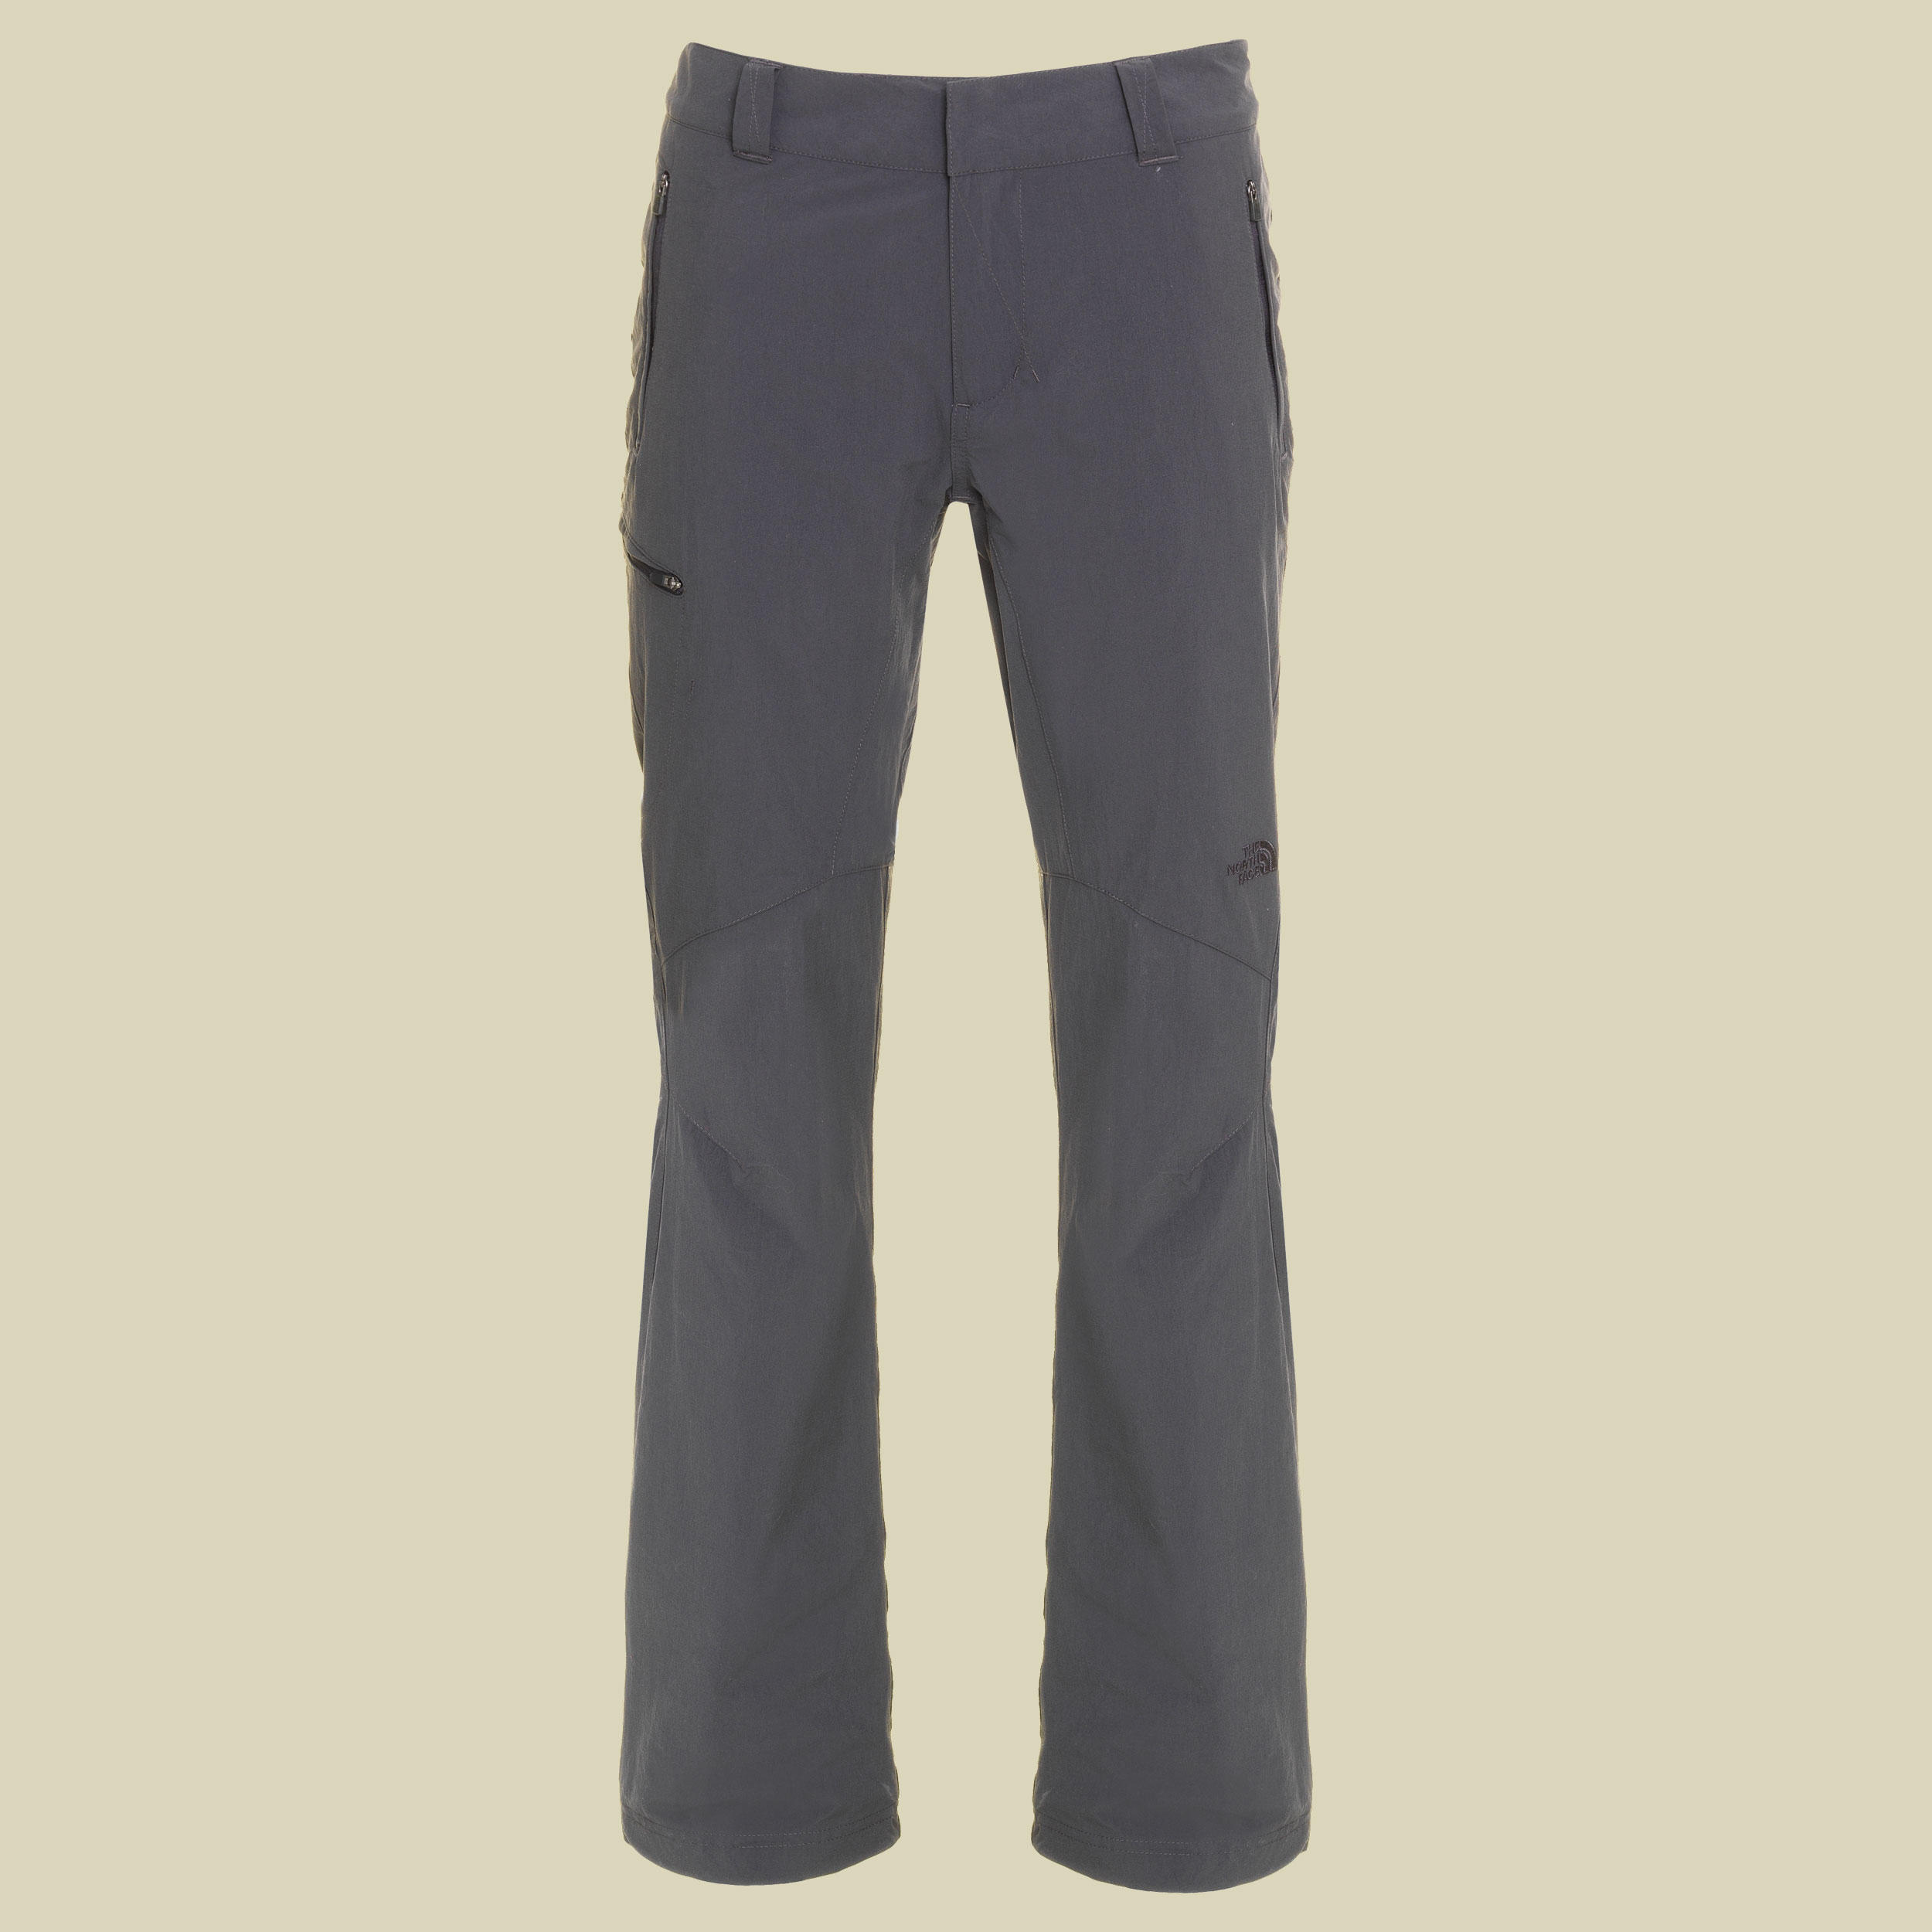 Women's Hanshi Insulated Pant Größe 36 Farbe asphalt grey